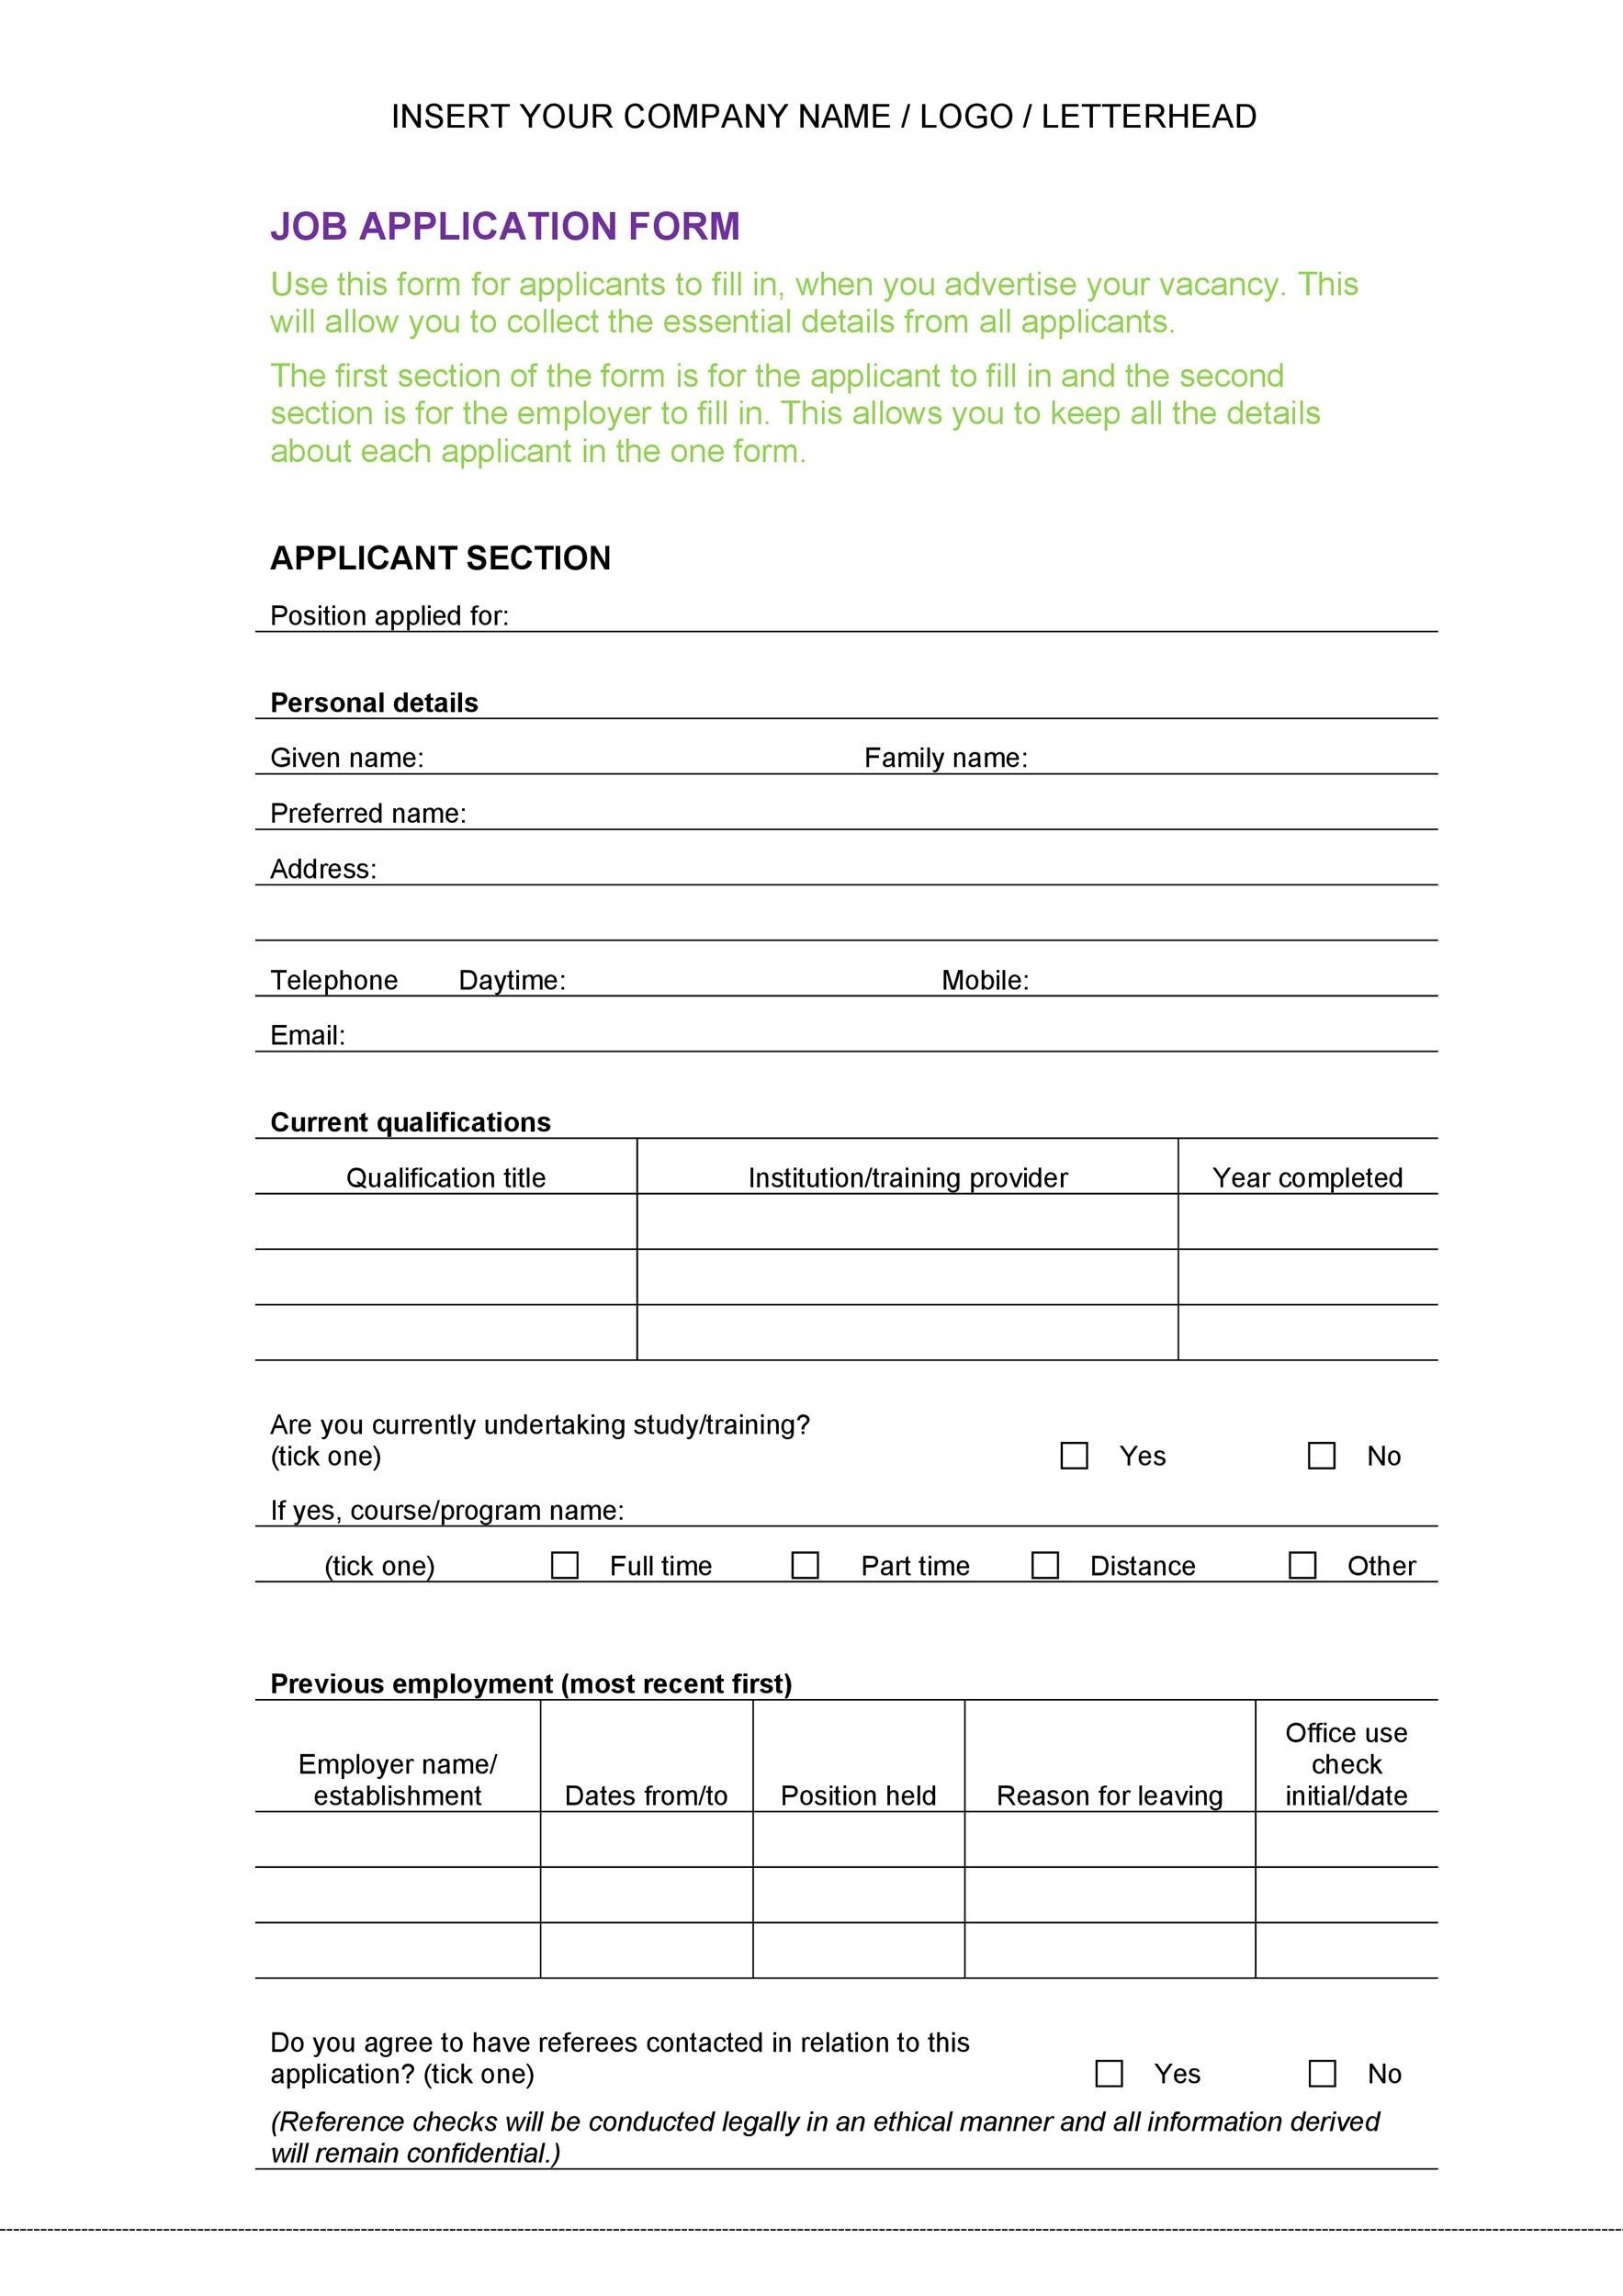 50-free-employment-job-application-form-templates-printable